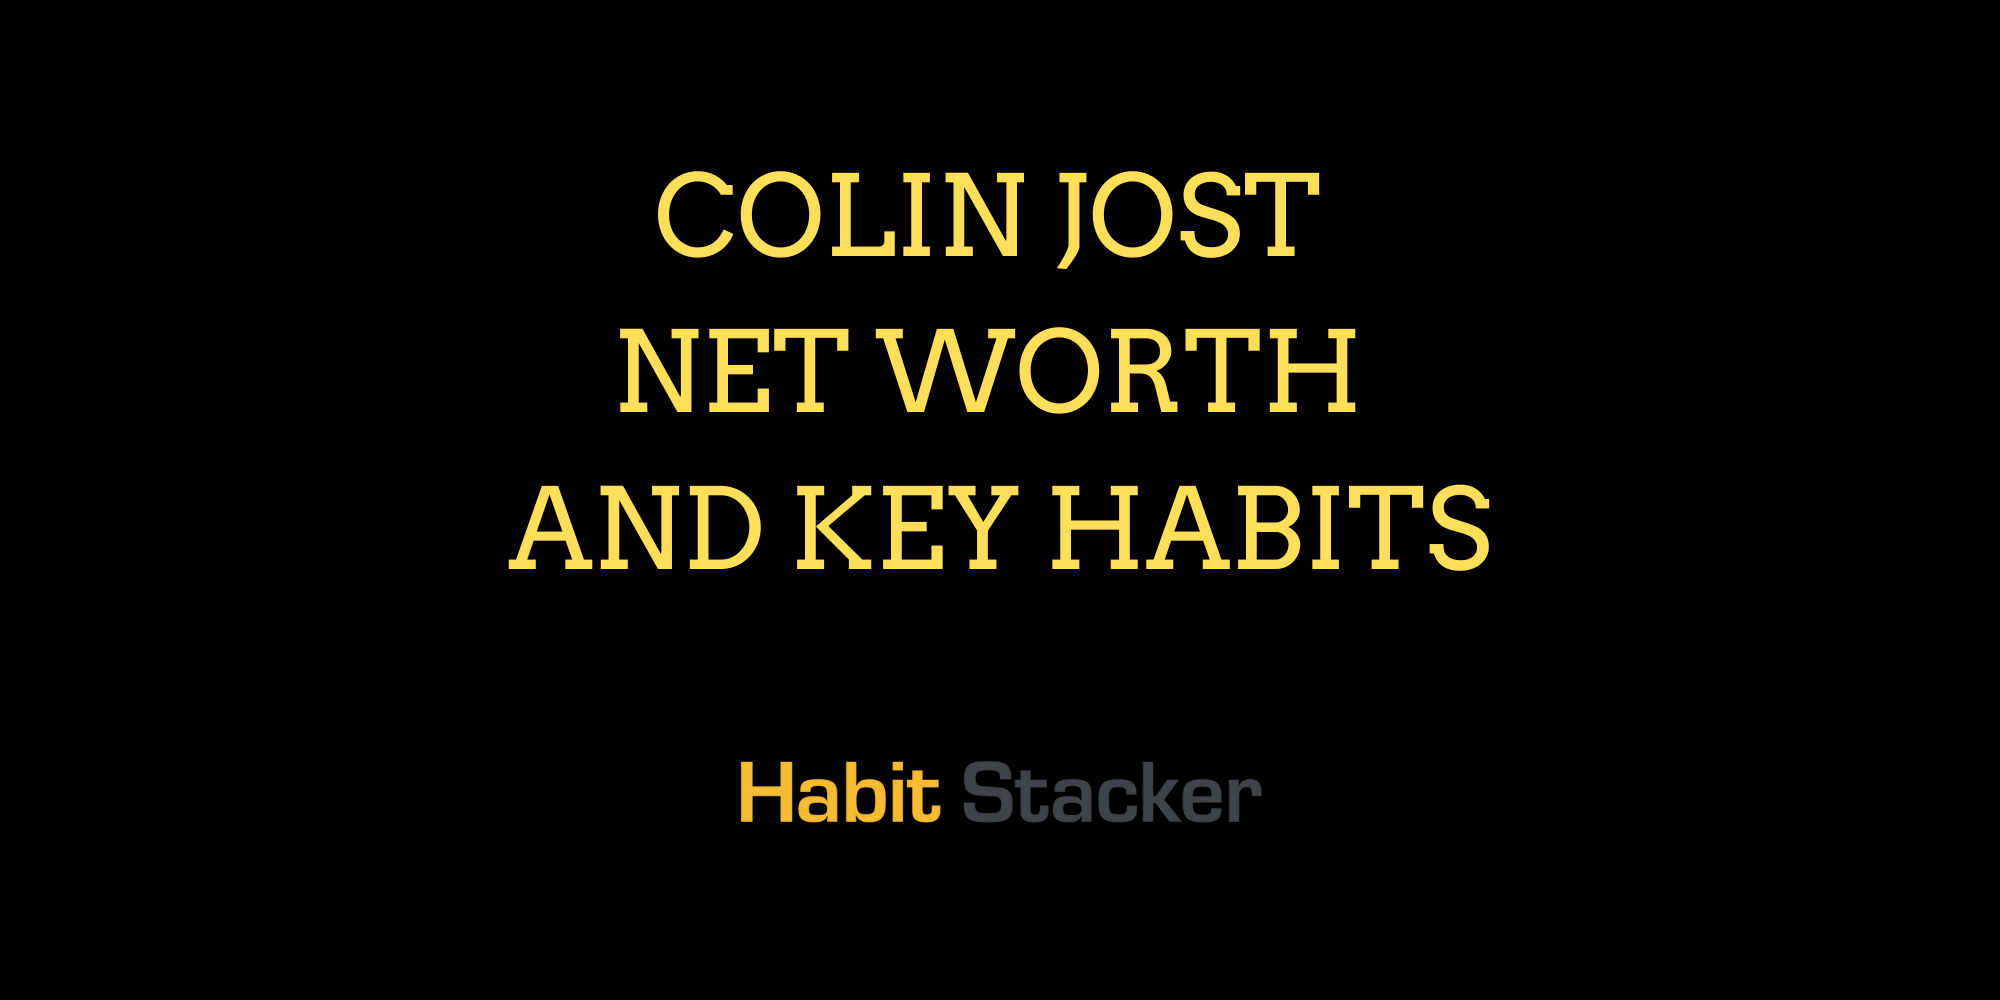 Colin Jost Net Worth and Key Habits